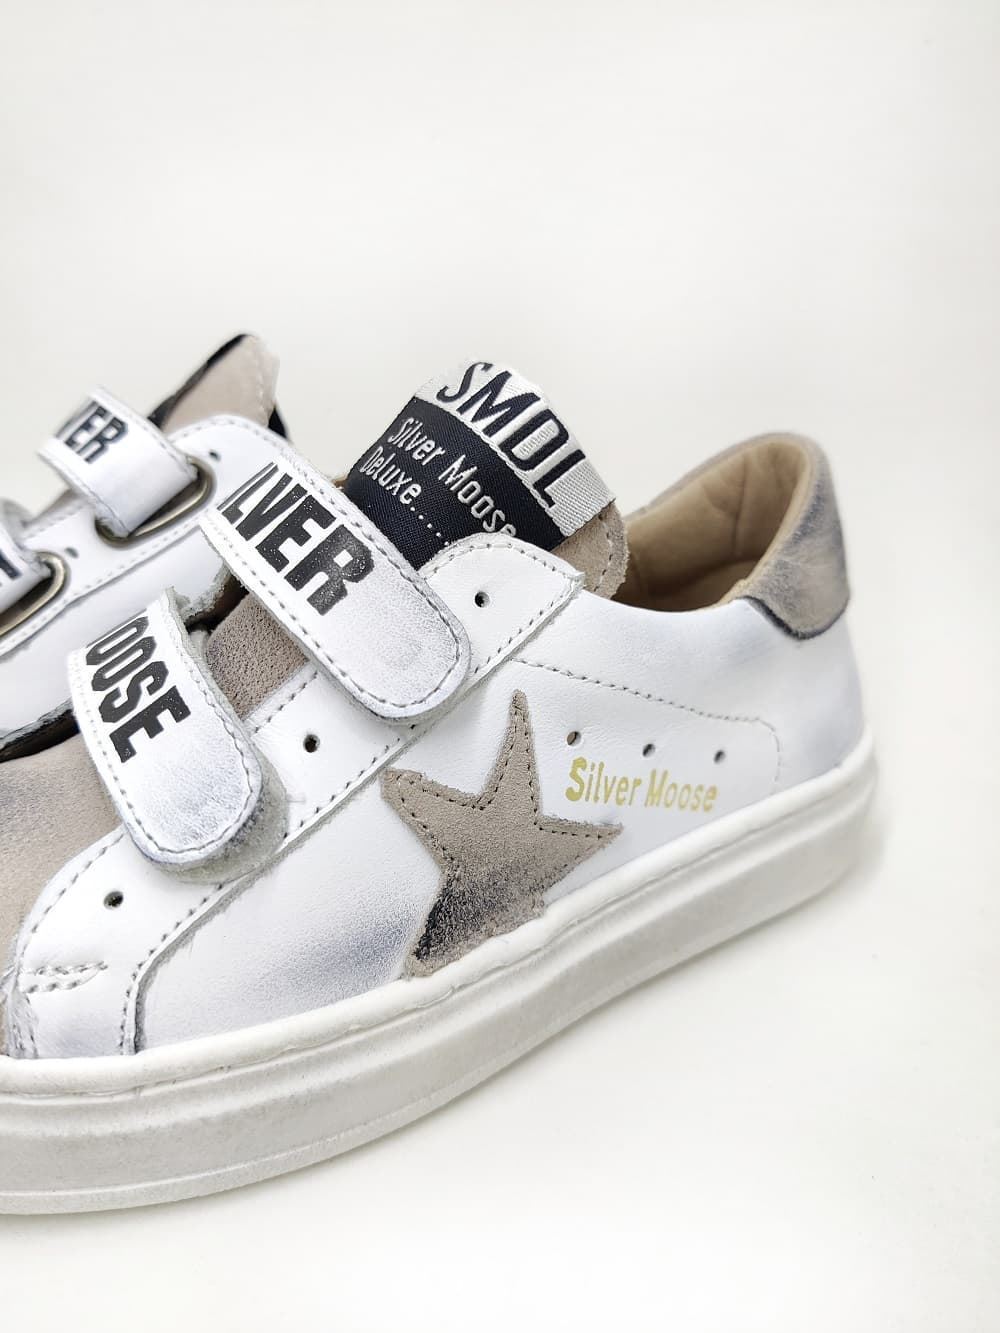 Sneakers Golden Star en piel Blanco Taupe con Velcro Yowas - Imagen 4